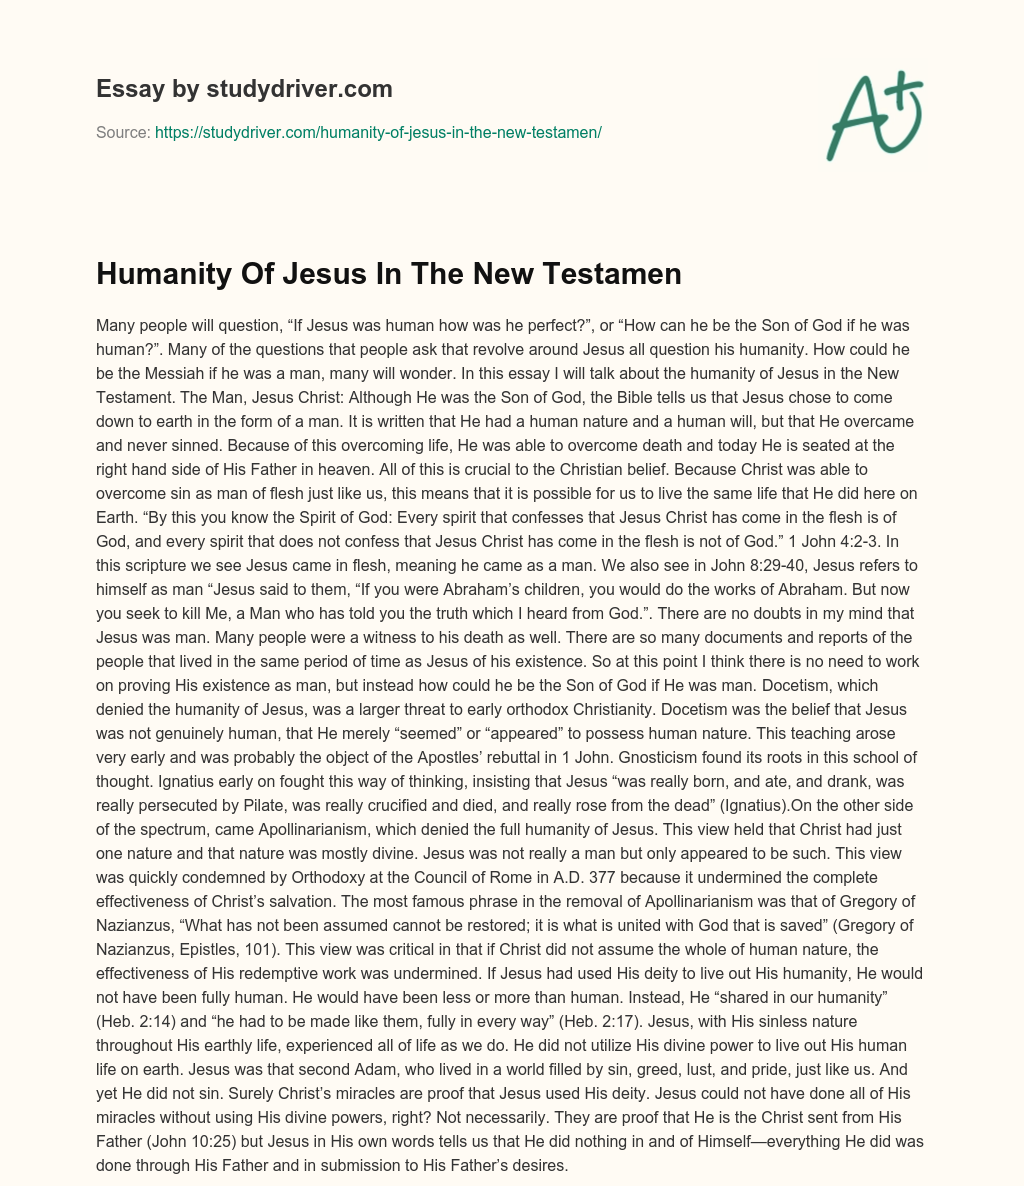 Humanity of Jesus in the New Testamen essay